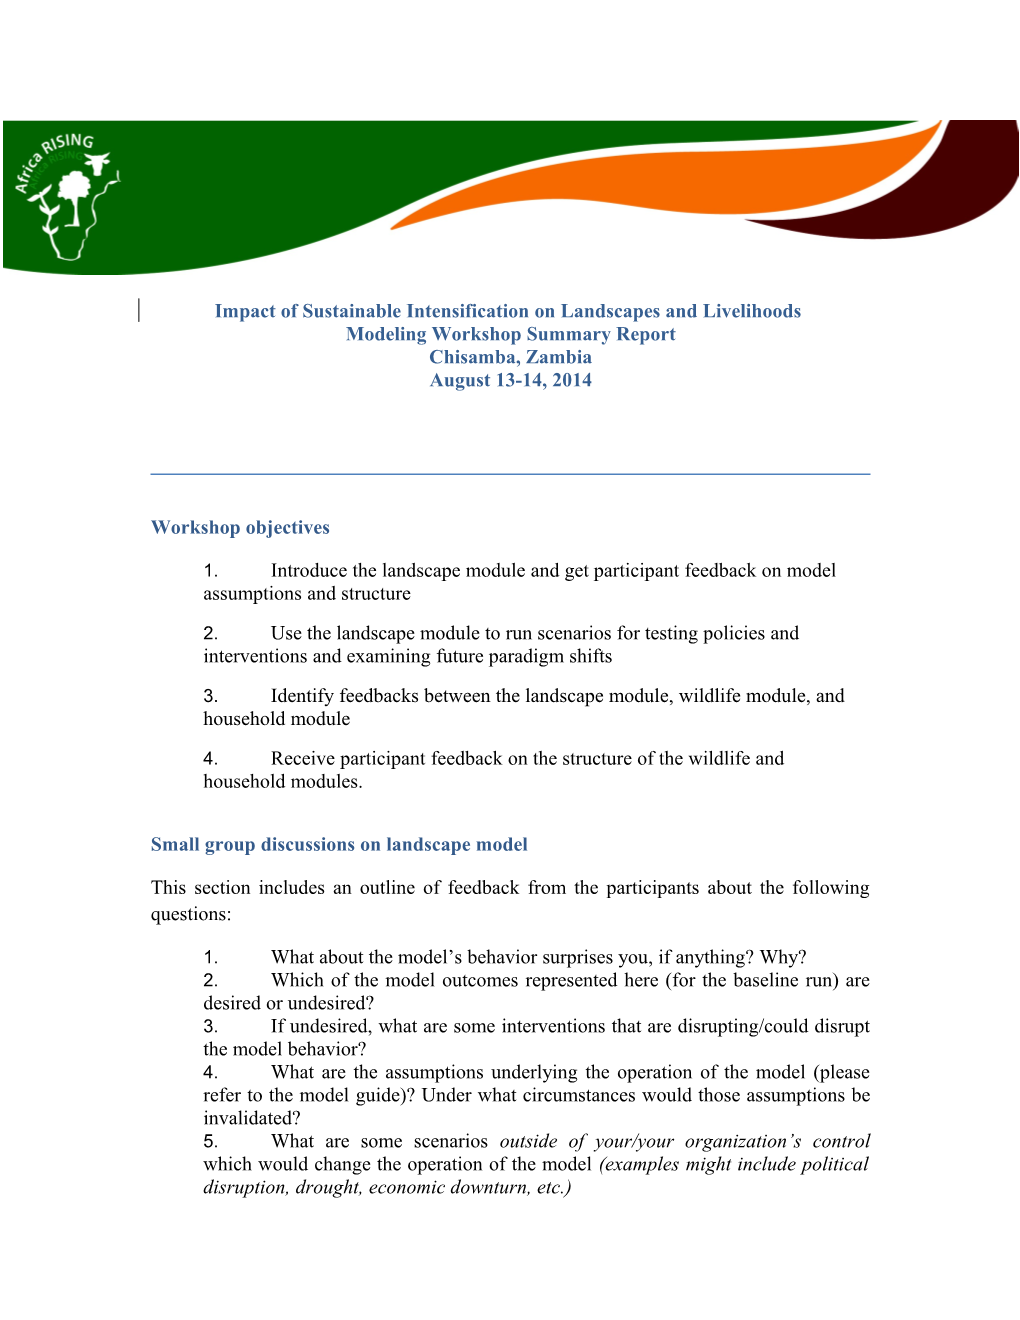 Modeling Workshop Summary Report